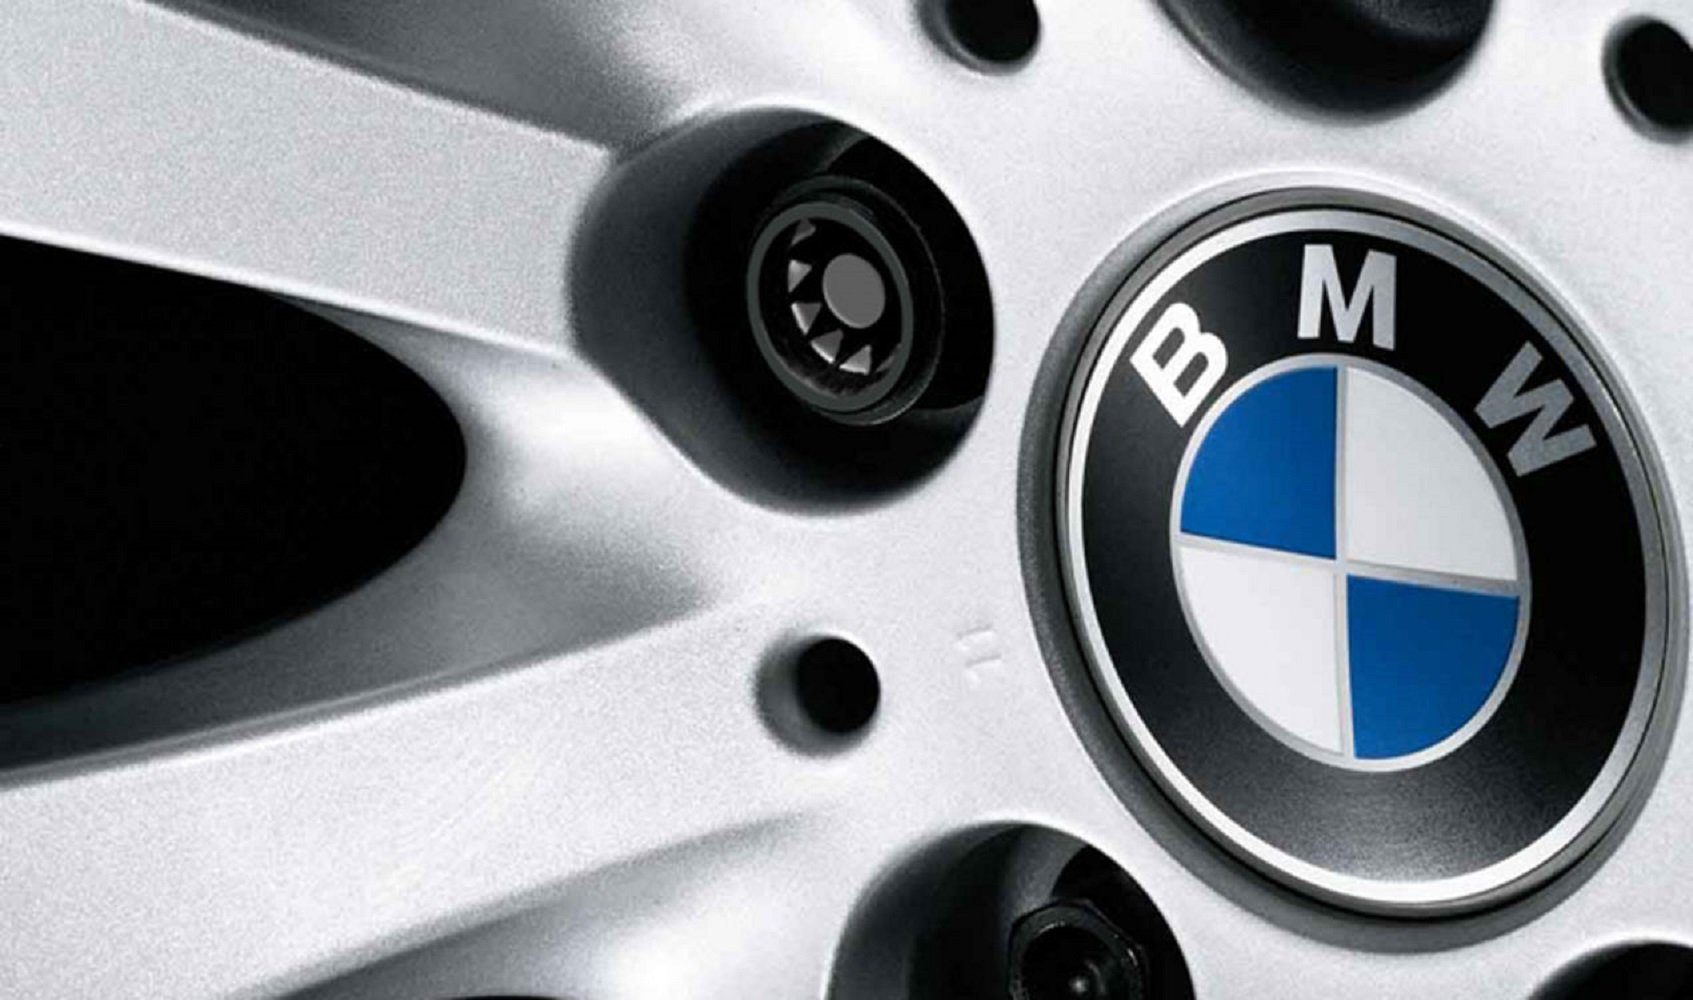 BMW Bremsscheibe ORIGINAL BMW Emblem Plakette Logo Heckklappe 51147146051  für er COUPE E92 (1-St)